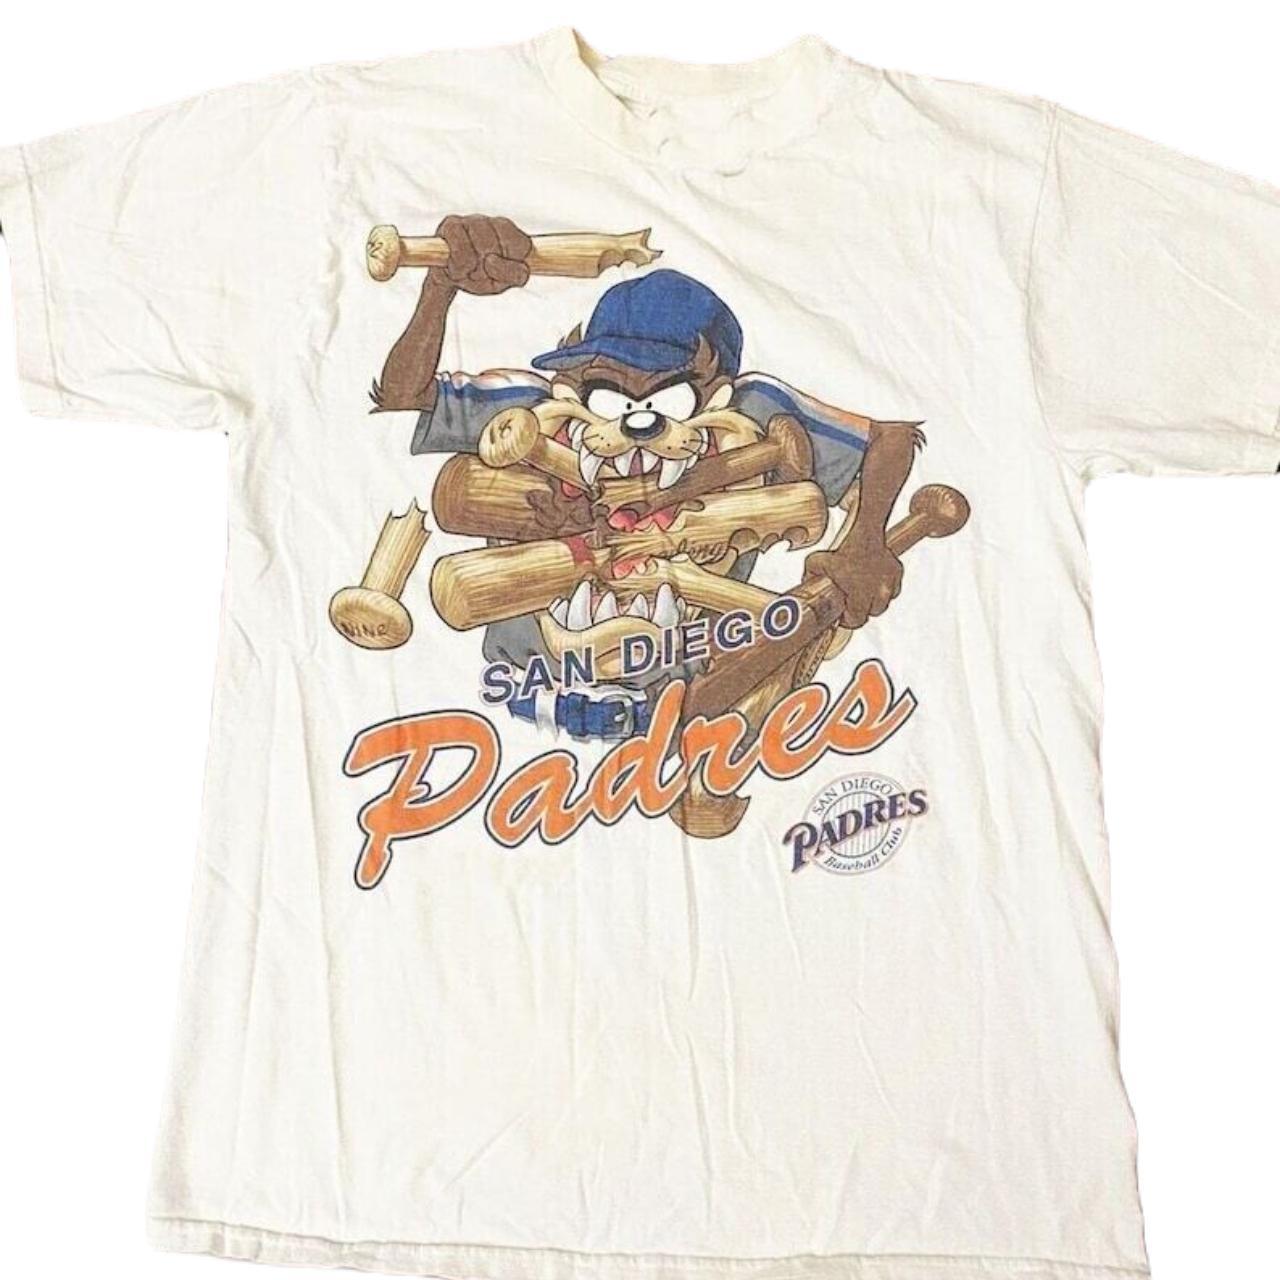 Vintage Los Angeles Dodgers Looney Tunes T-Shirt